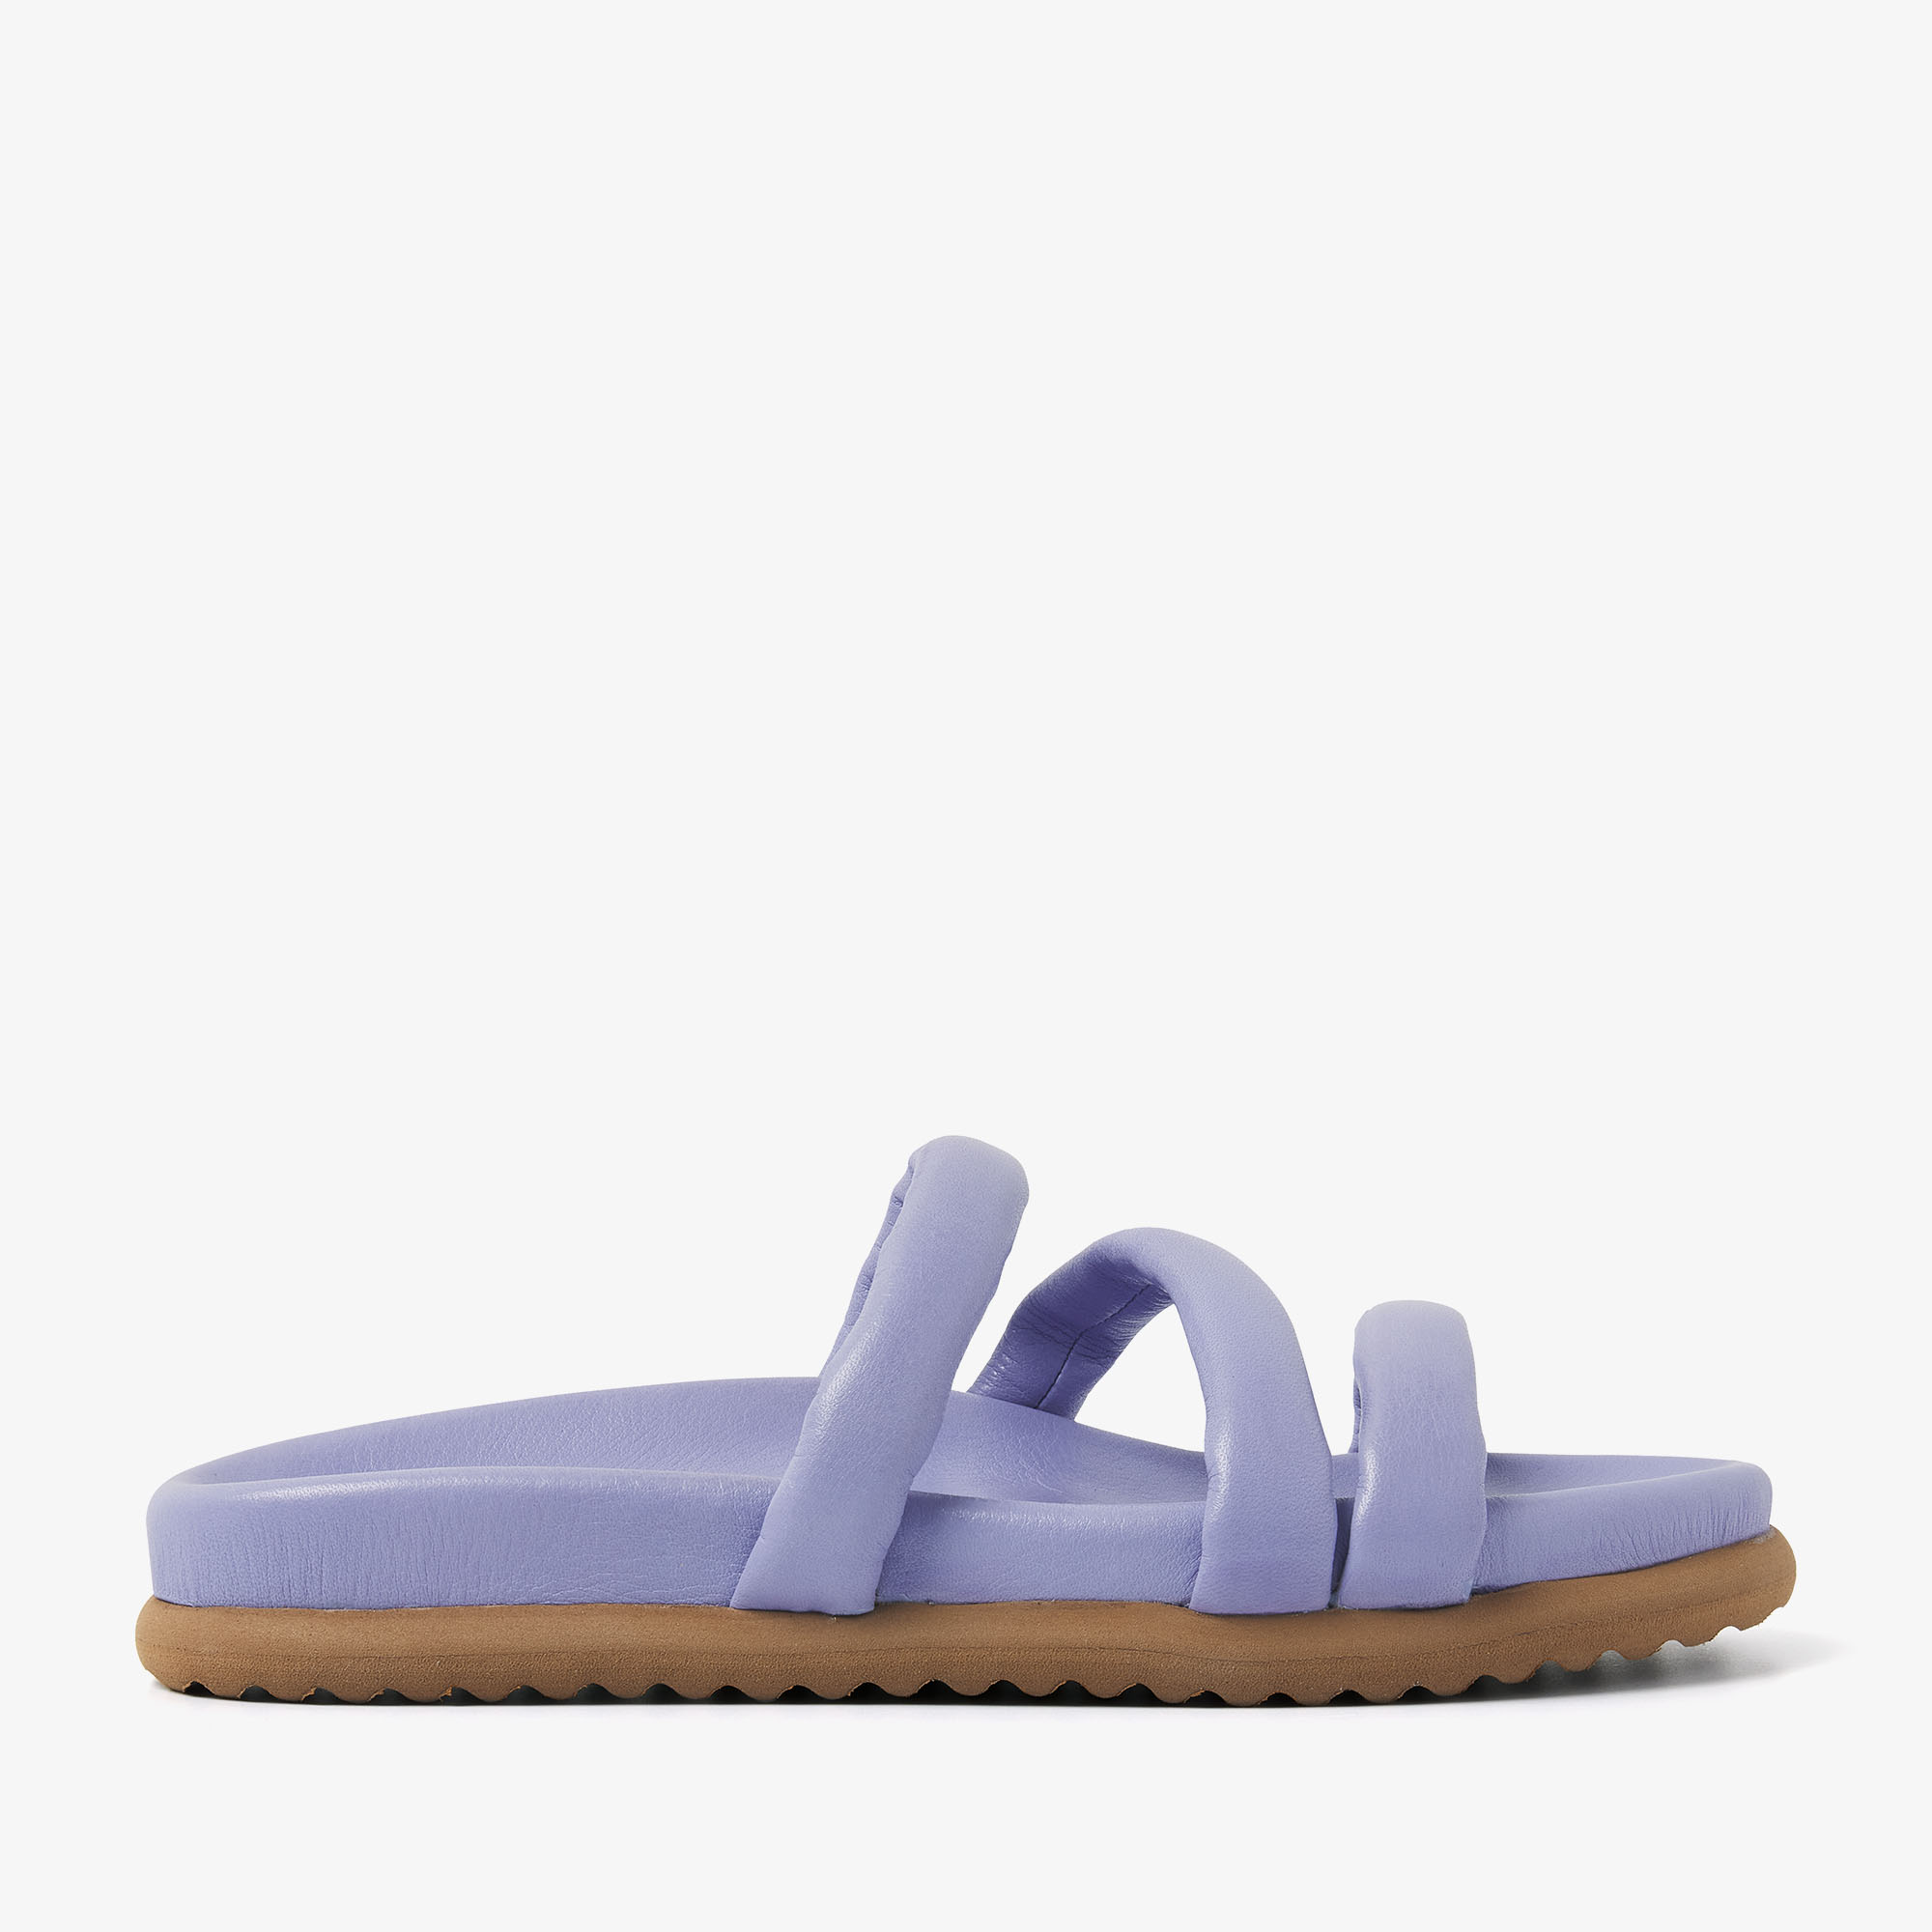 VIA VAI Candy Pop purple slippers